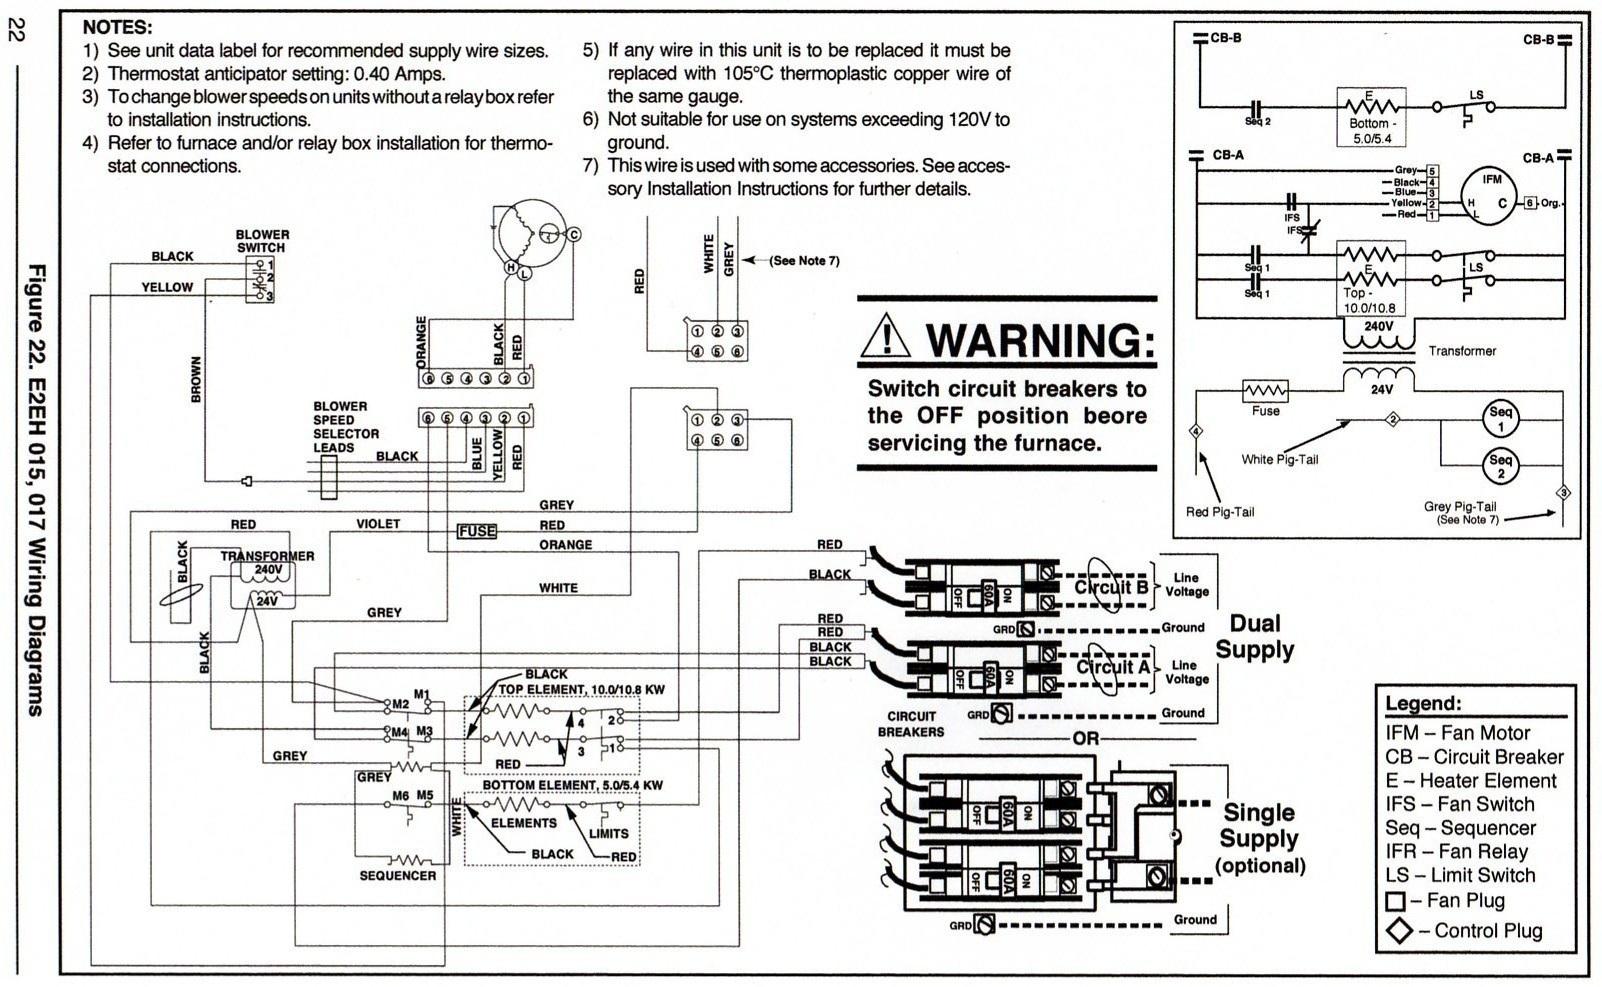 Sequencer Wiring Diagram | Wiring Diagram - Electric Furnace Sequencer Wiring Diagram